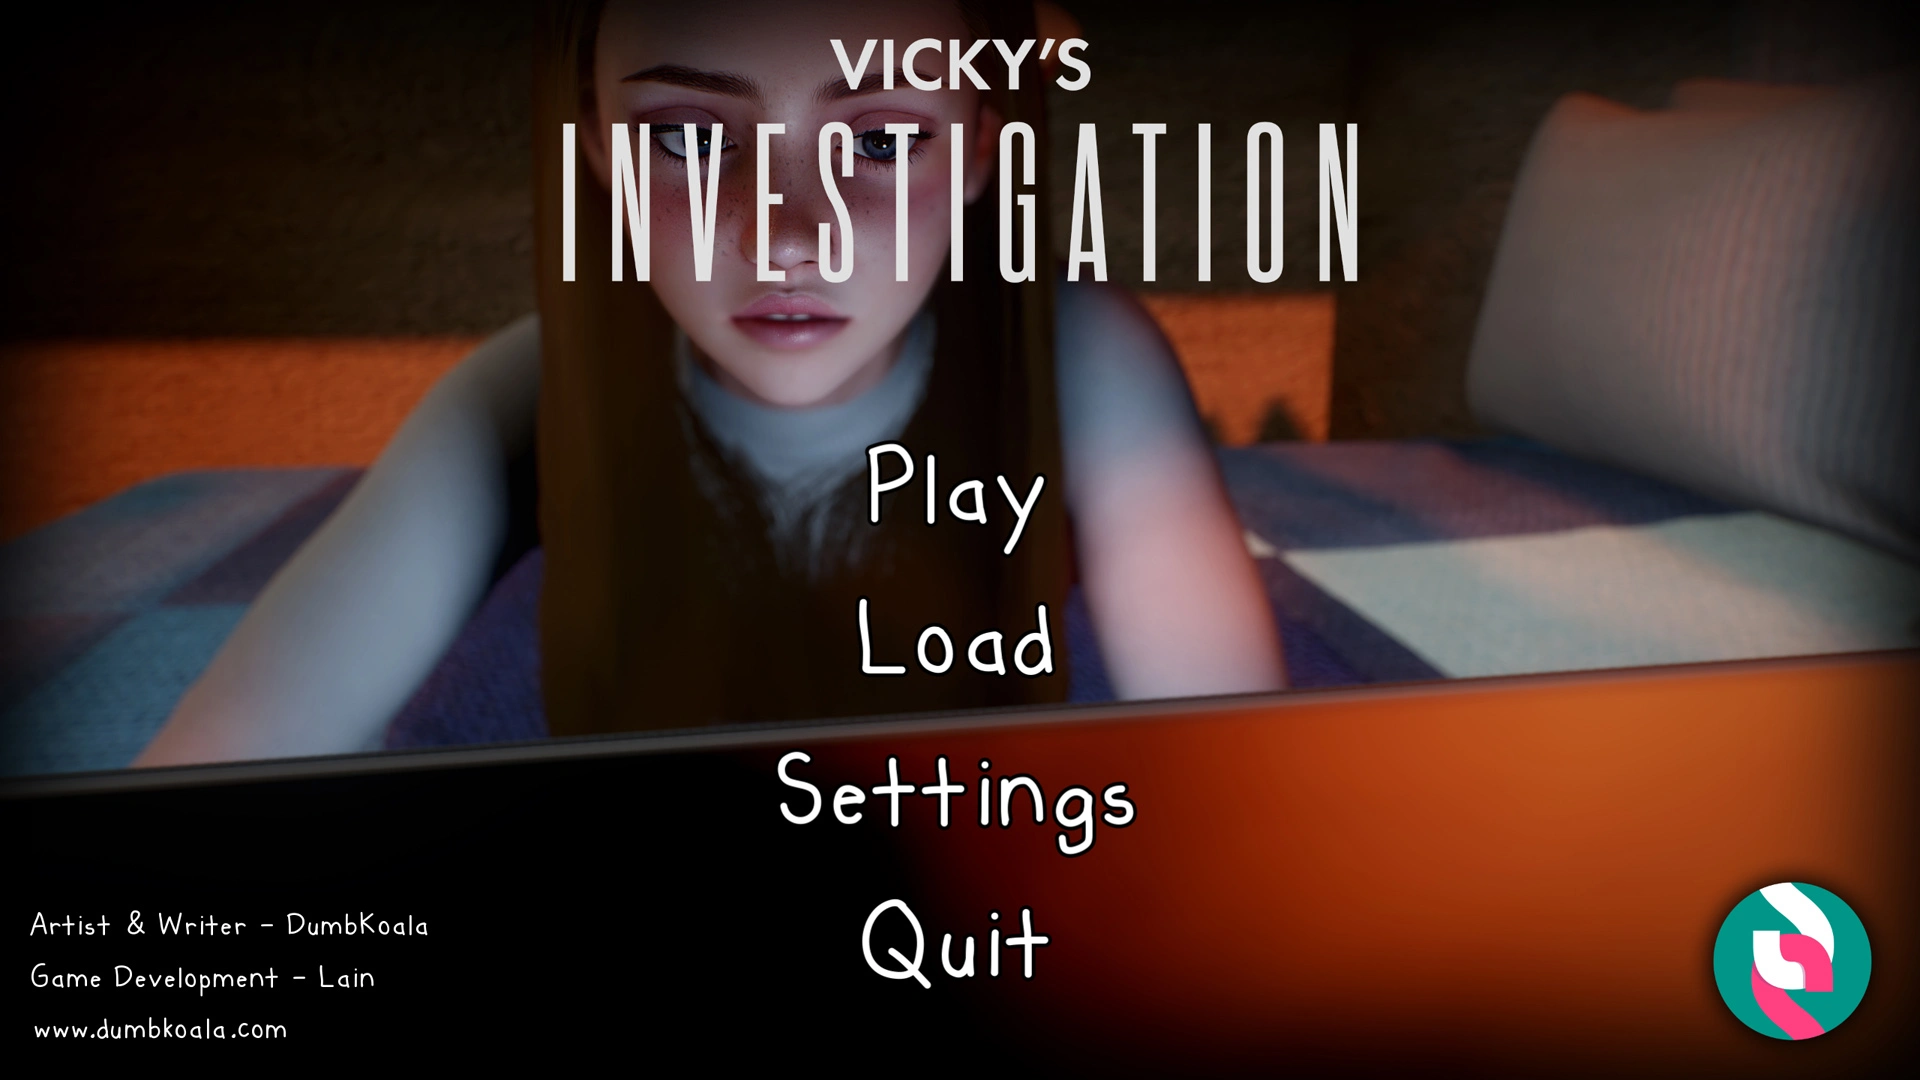 Vicky's Investigation main image